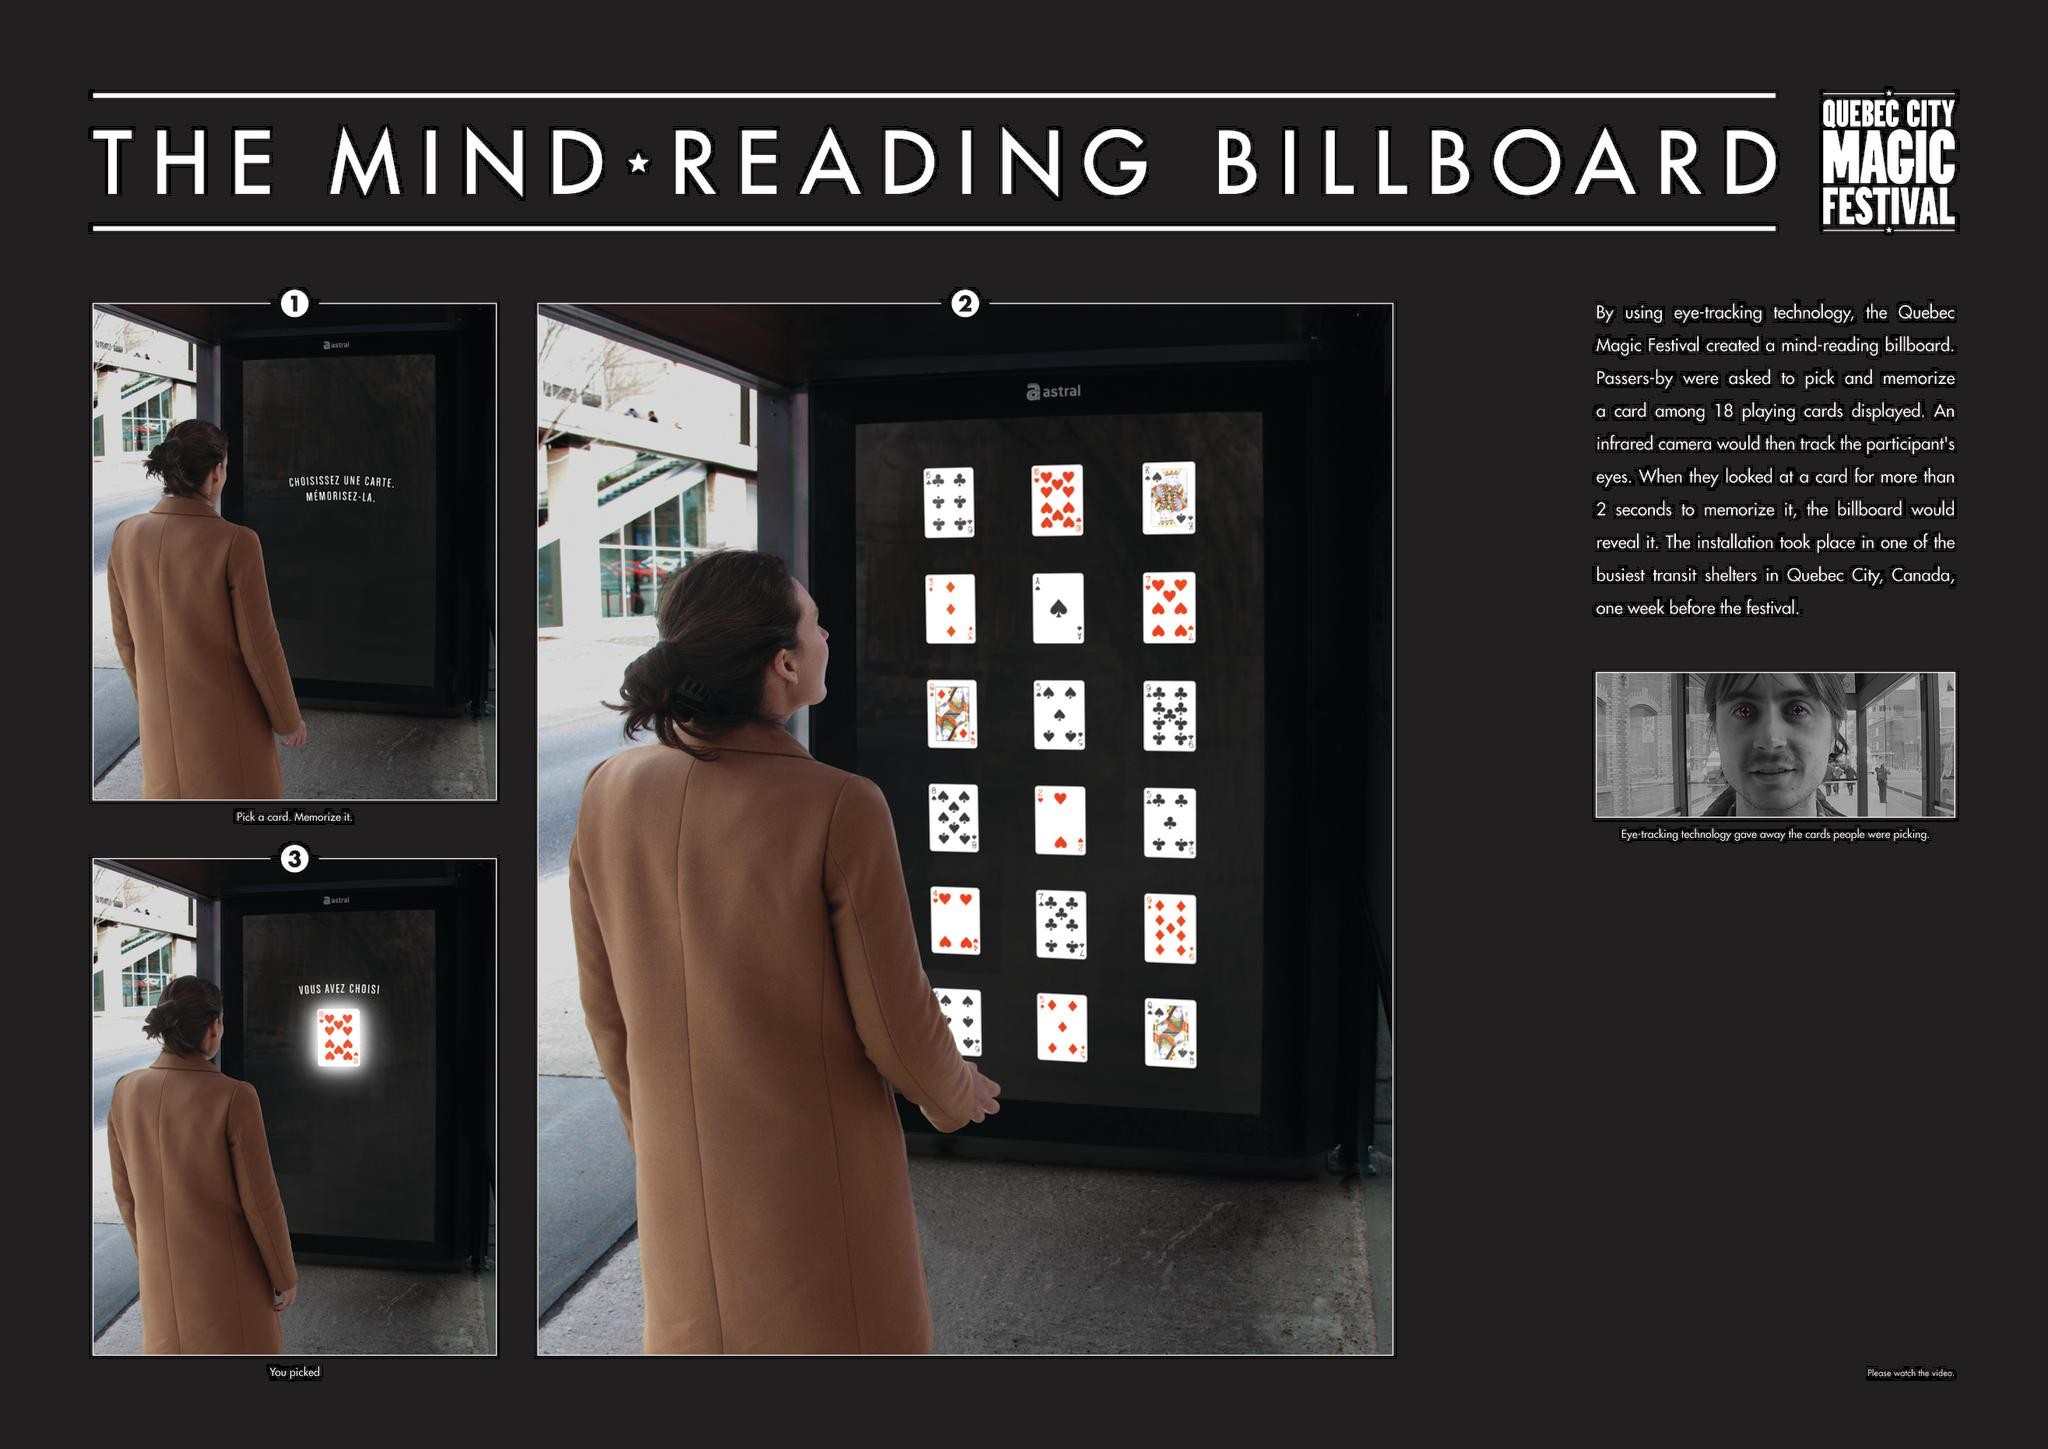 The mind-reading billboard